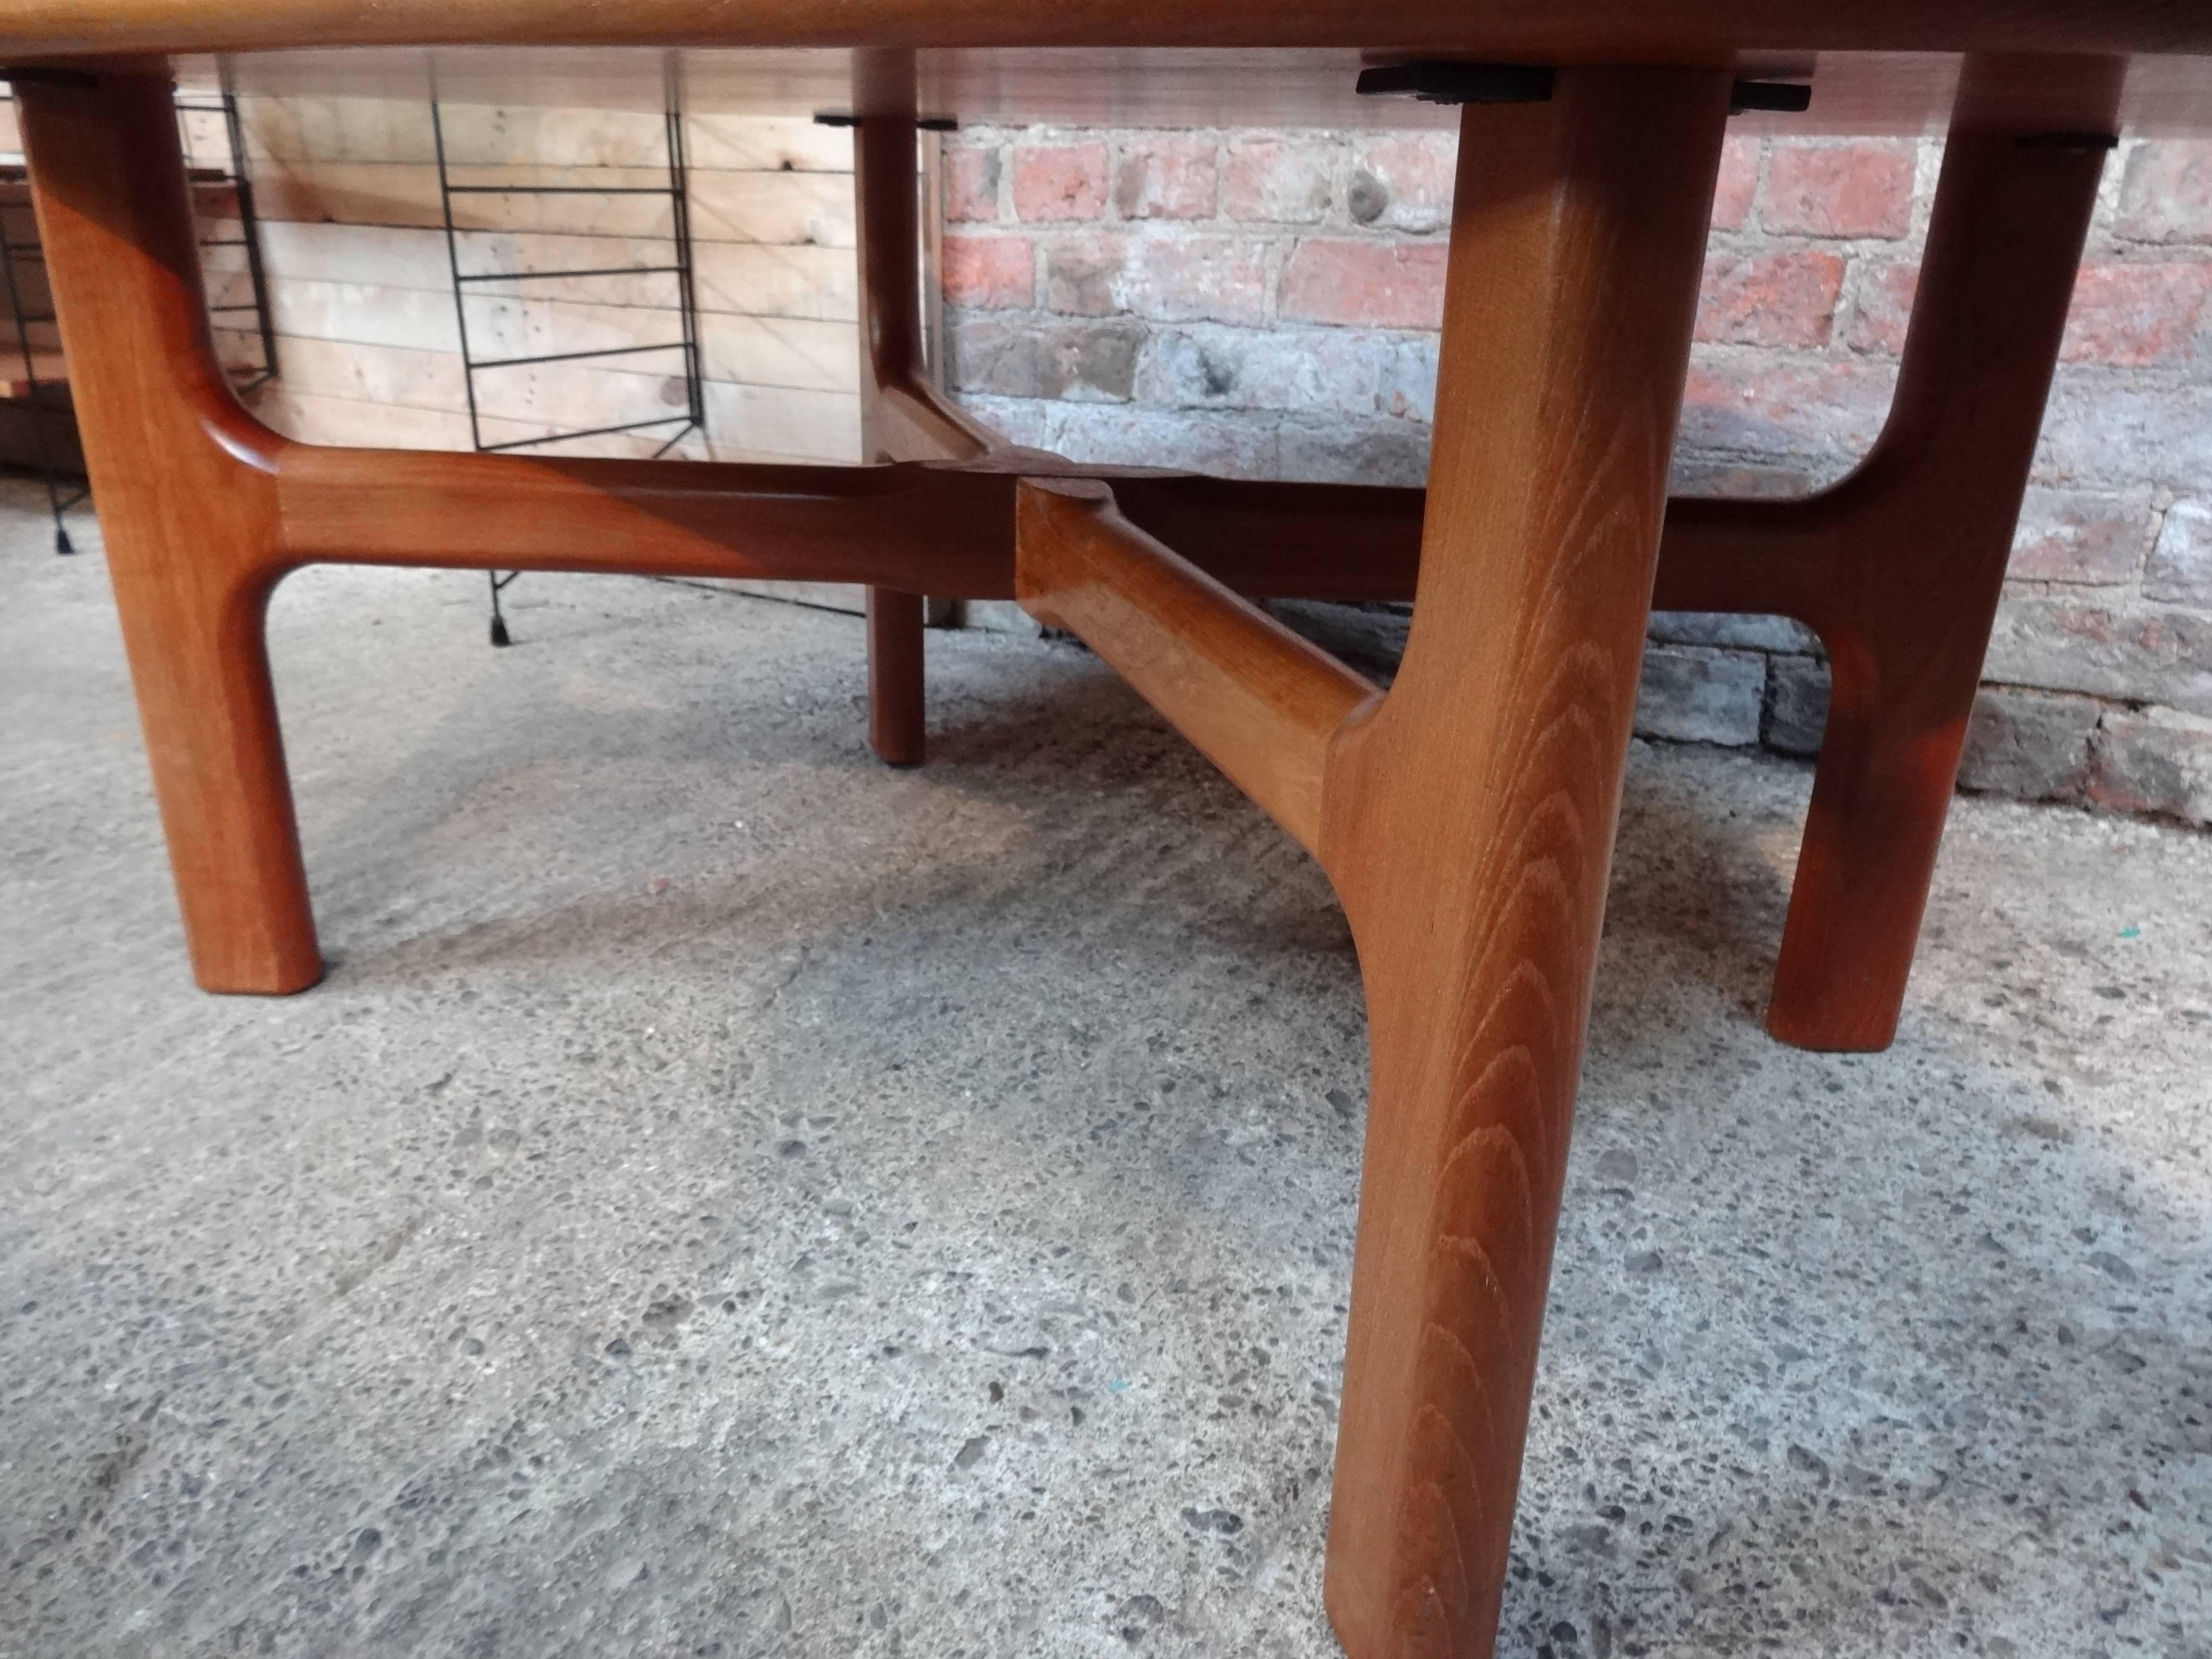 Rare solid teak Mid-Century Modern Dyrlund coffee table in mint vintage condition.